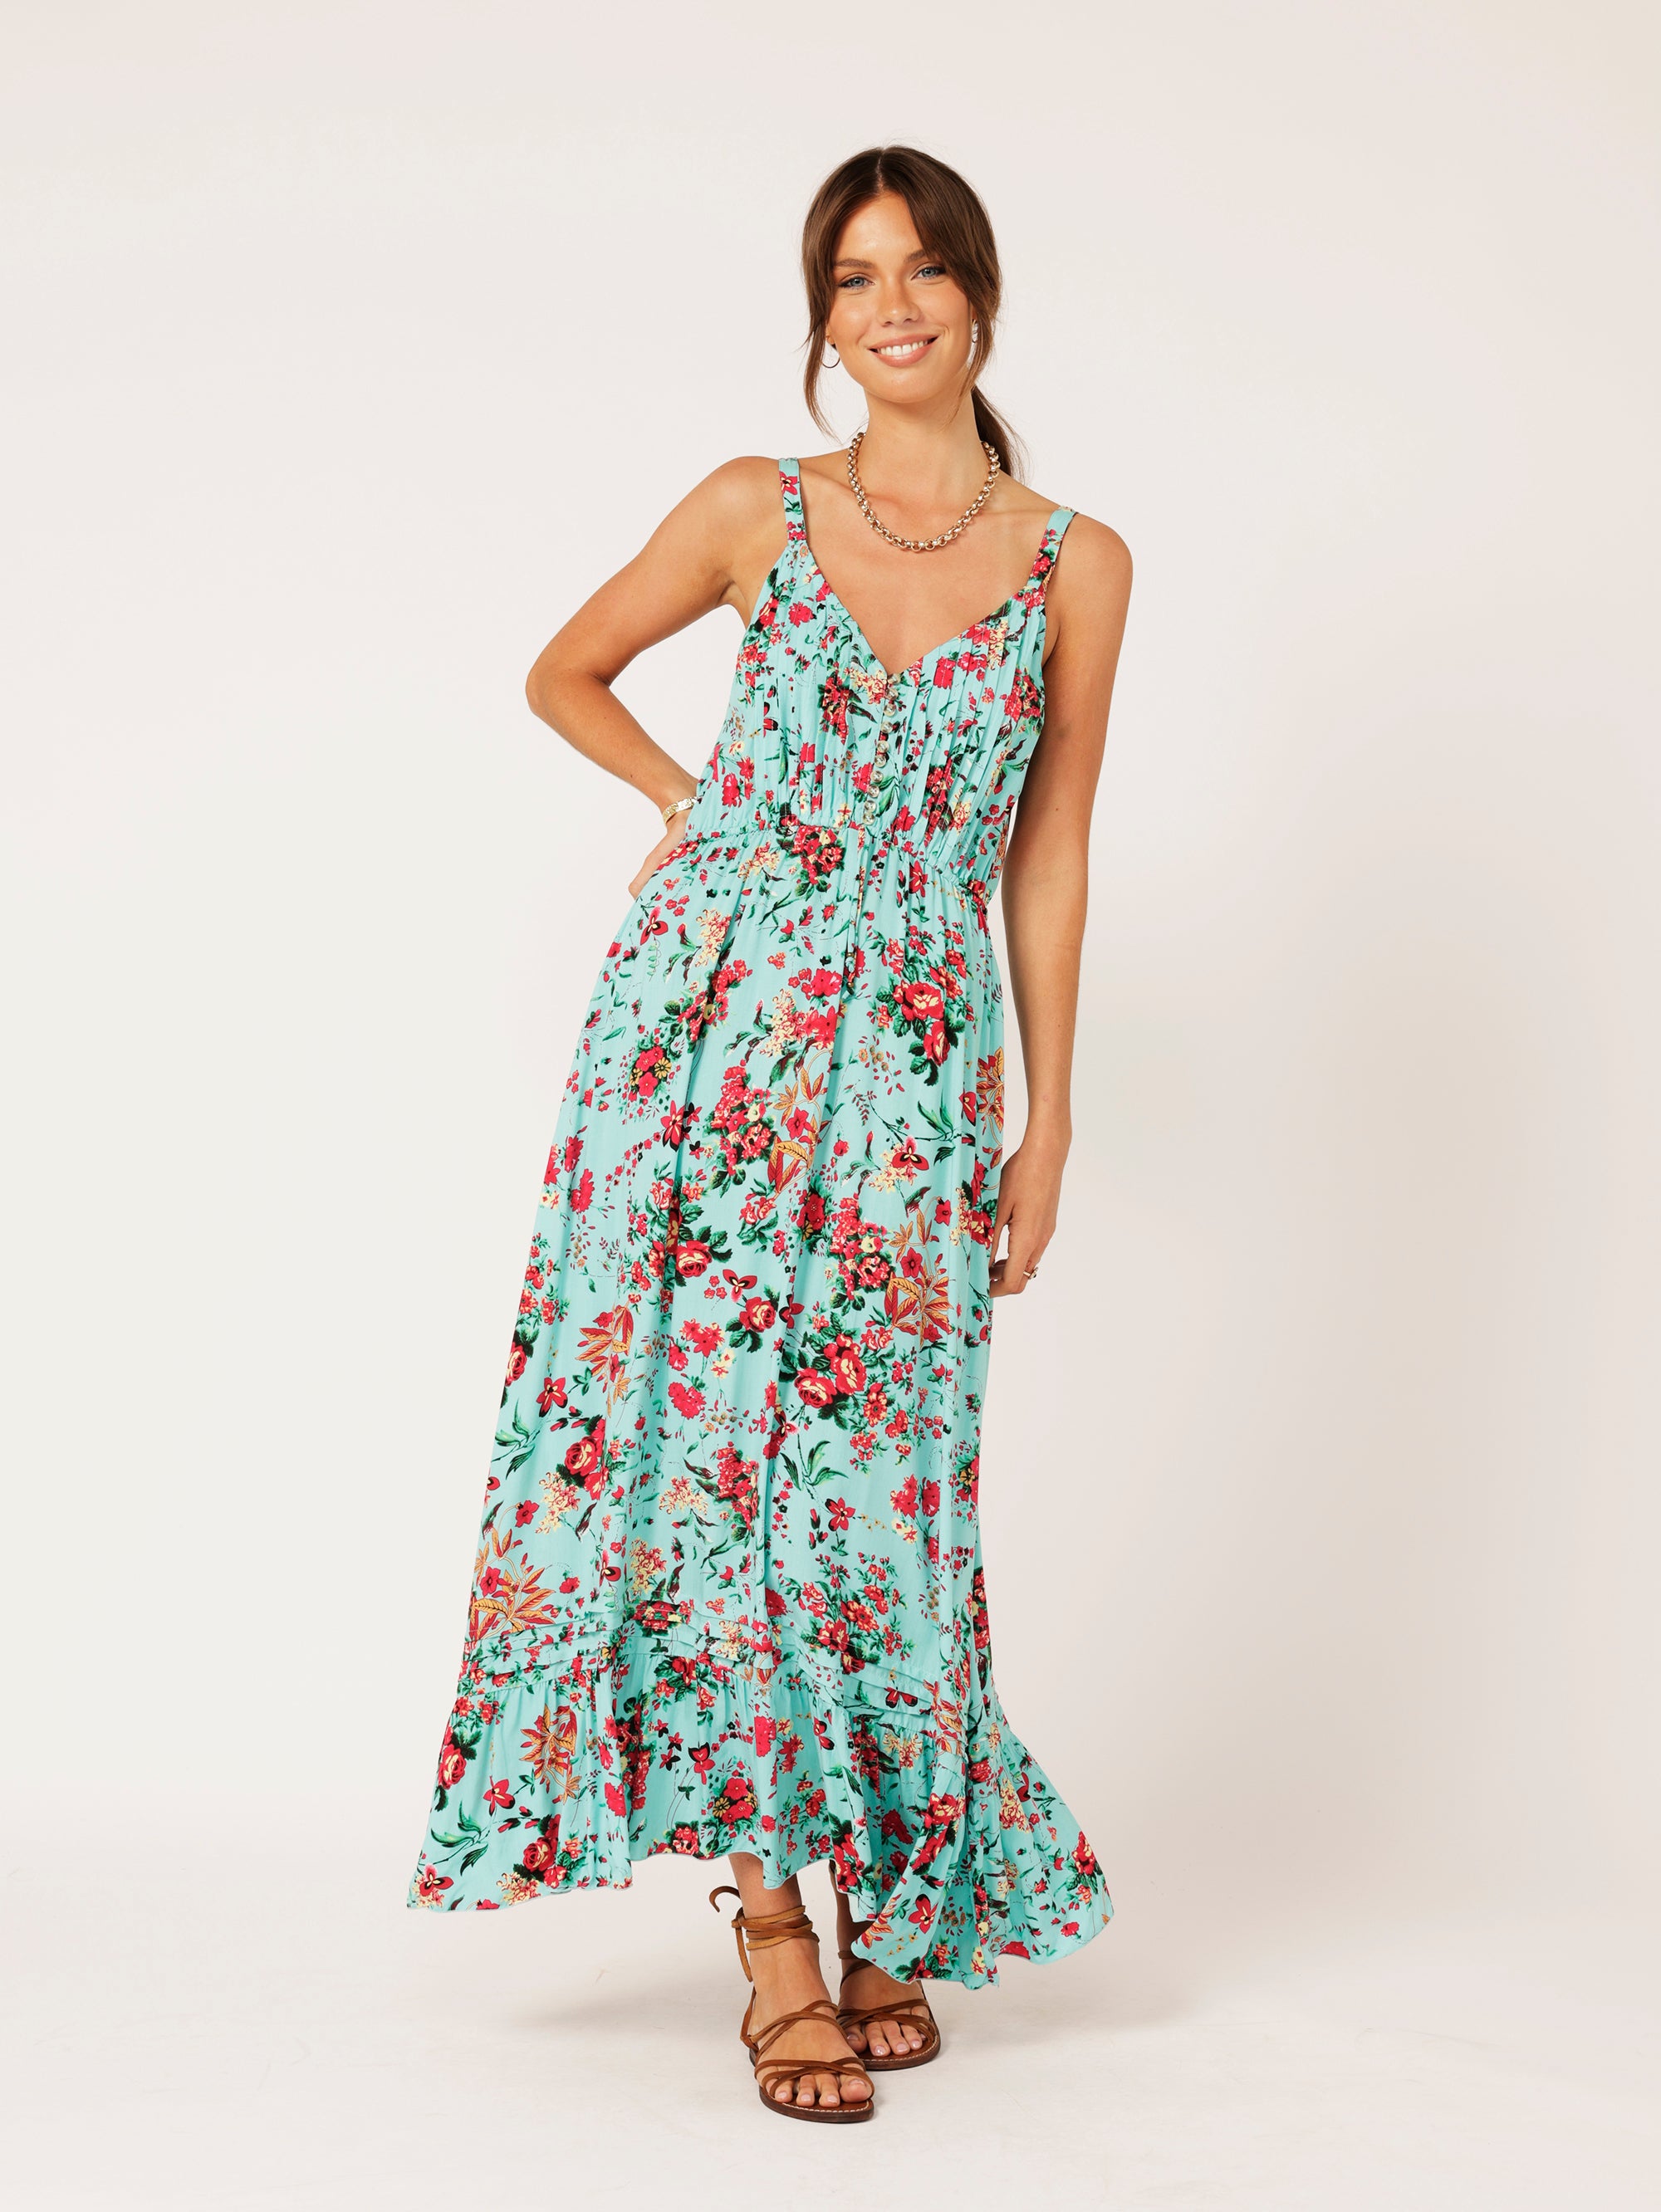 Boho Plus Size Dresses Australia – Saffron Road